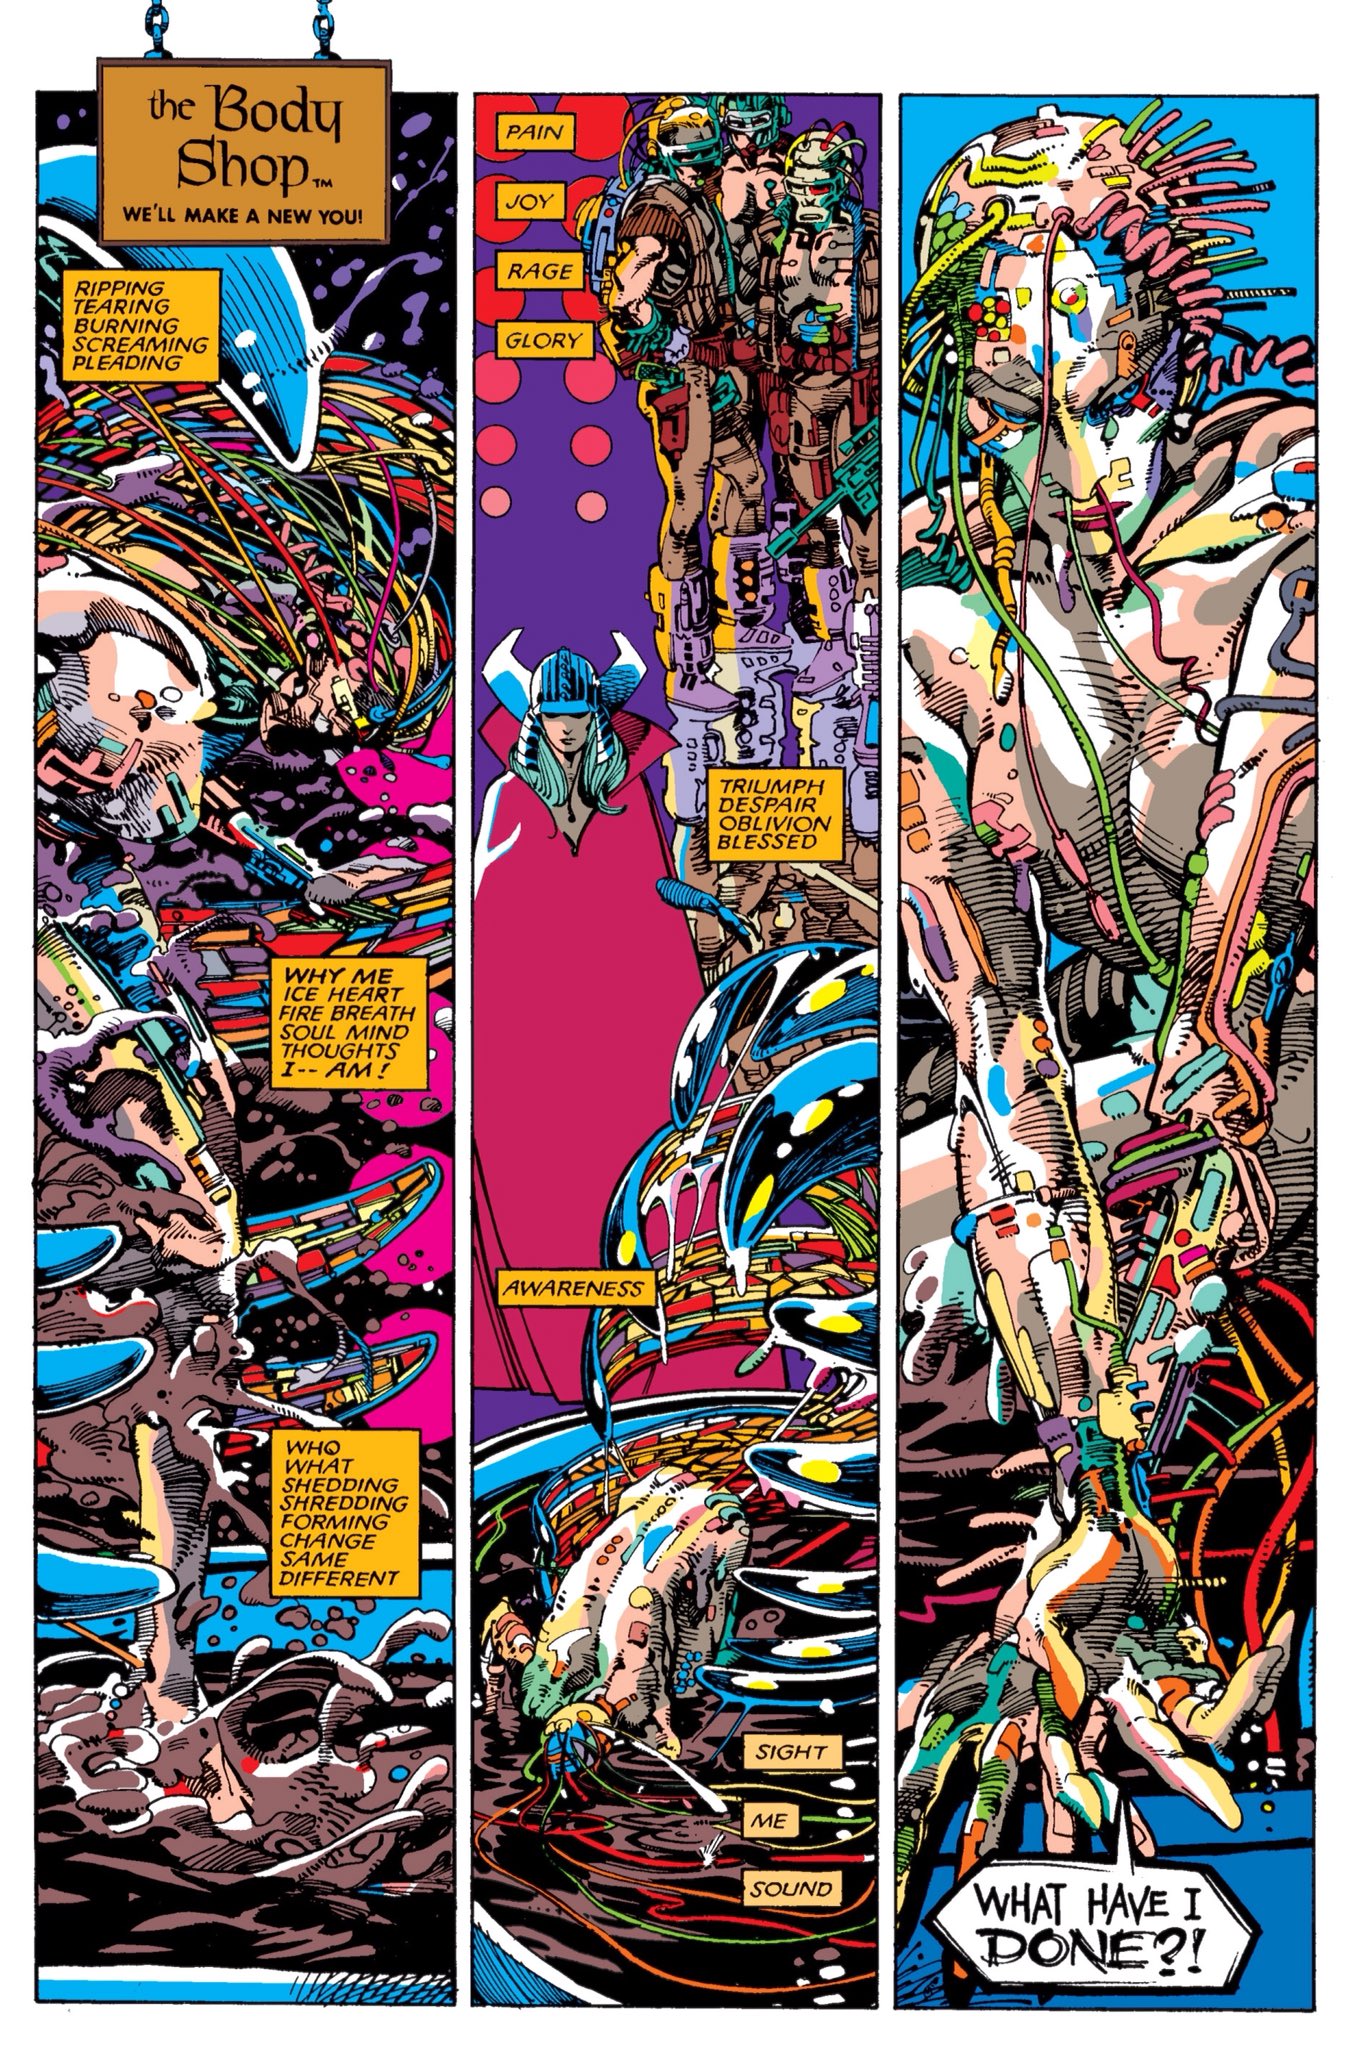 Cool Comic Art on X: Uncanny X-Men #205 (1986) art by Barry Windsor-Smith  t.cod9Q7ZWpDuZ  X